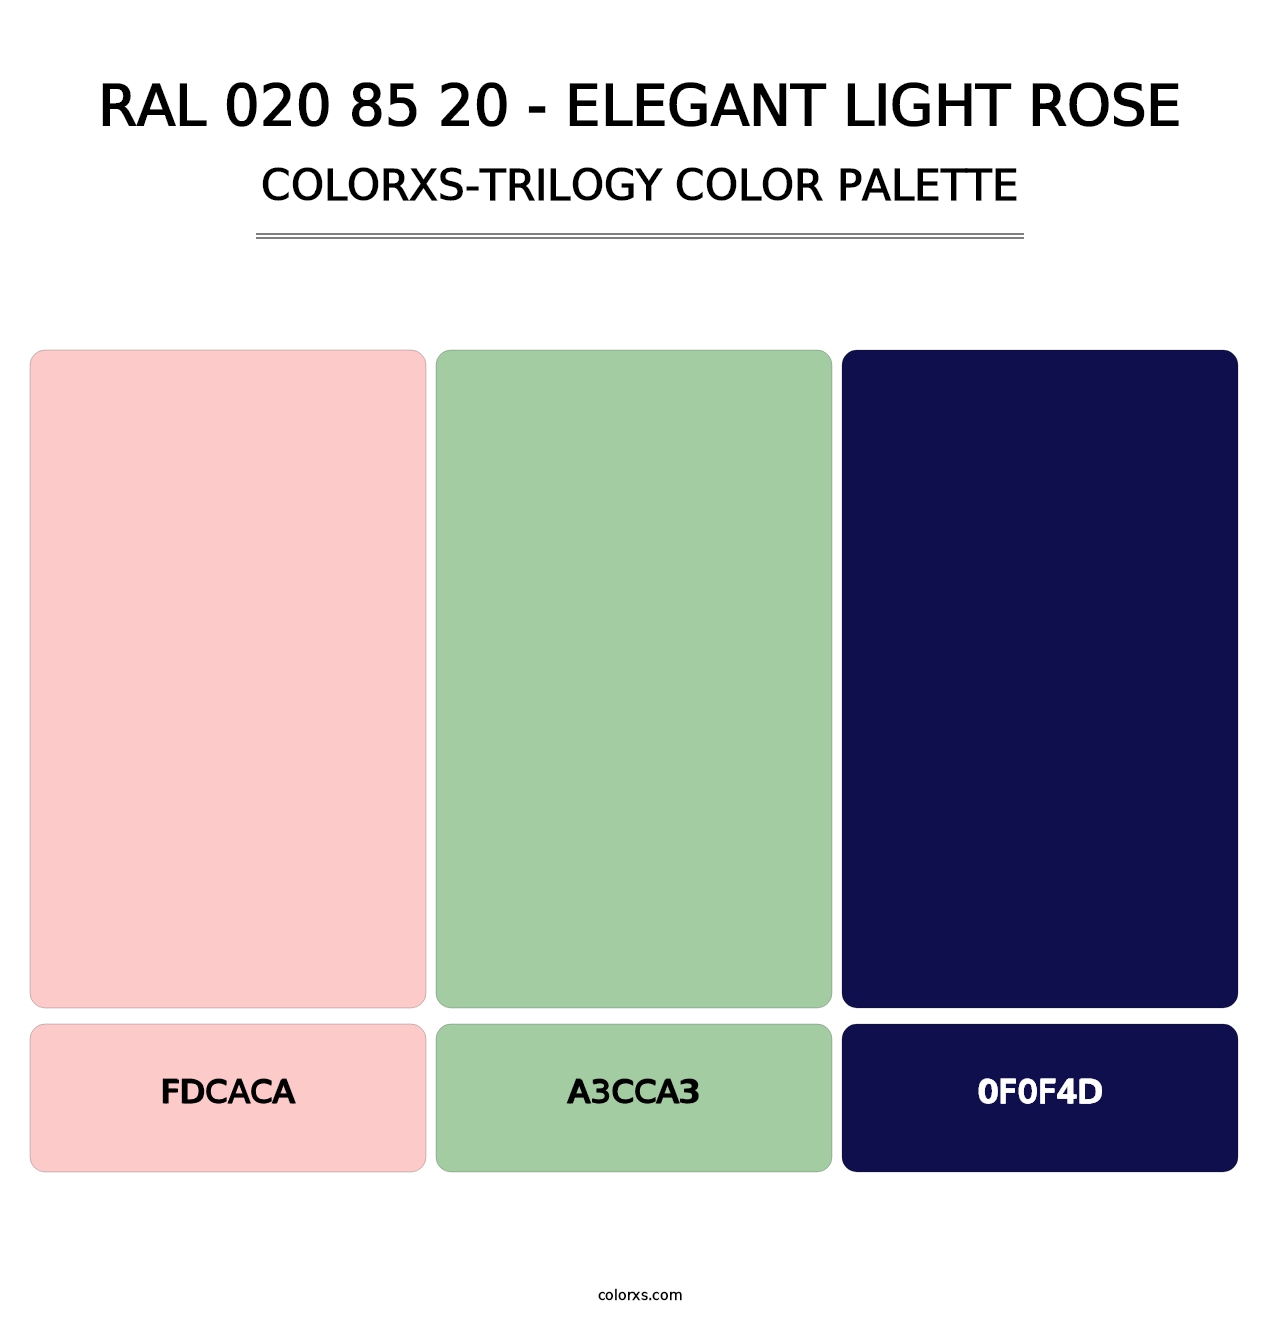 RAL 020 85 20 - Elegant Light Rose - Colorxs Trilogy Palette